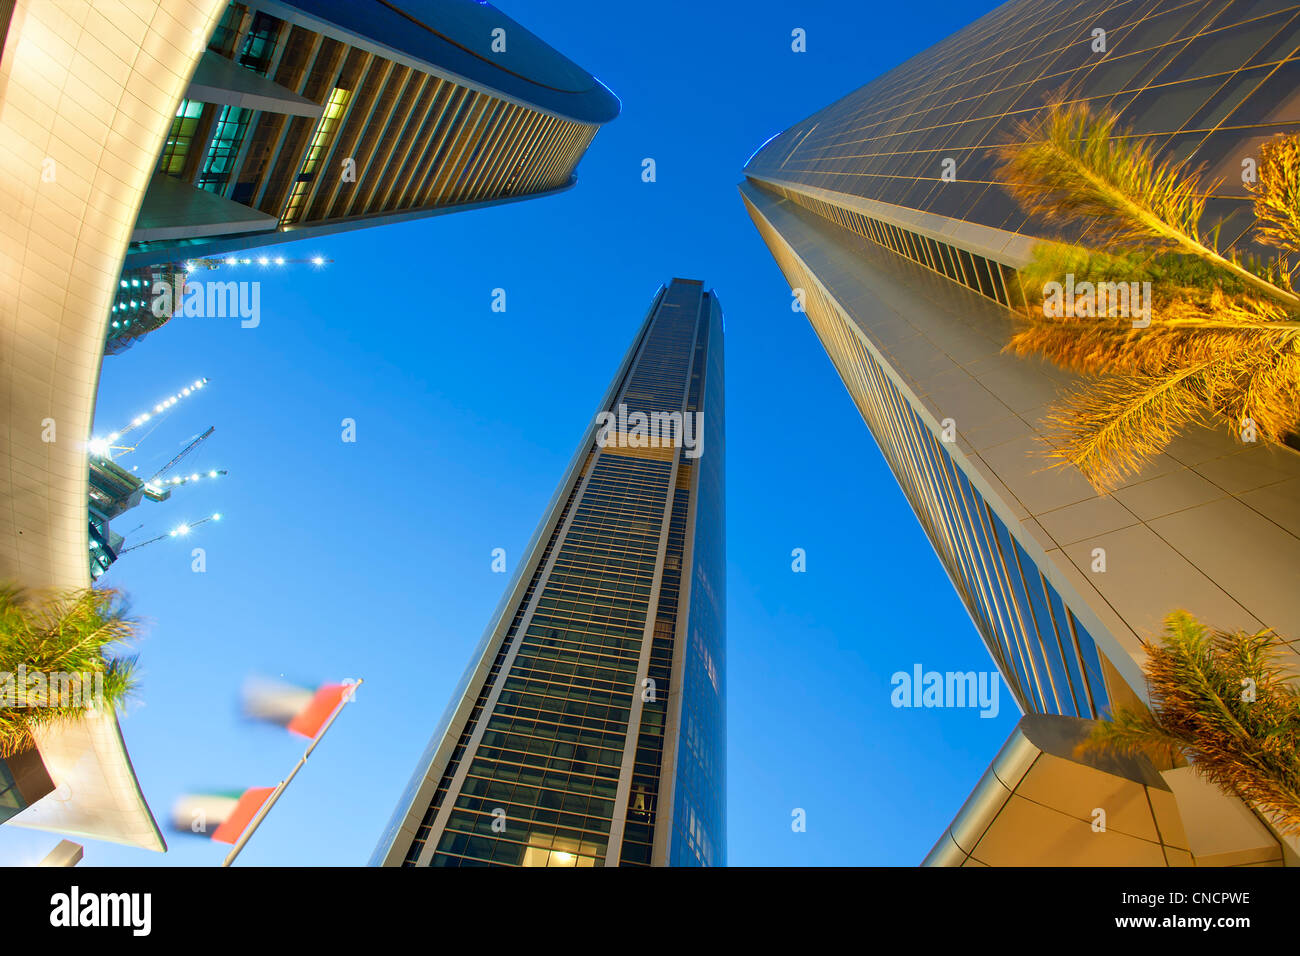 Abu Dhabi, Jumeirah Etihad Towers Stock Photo